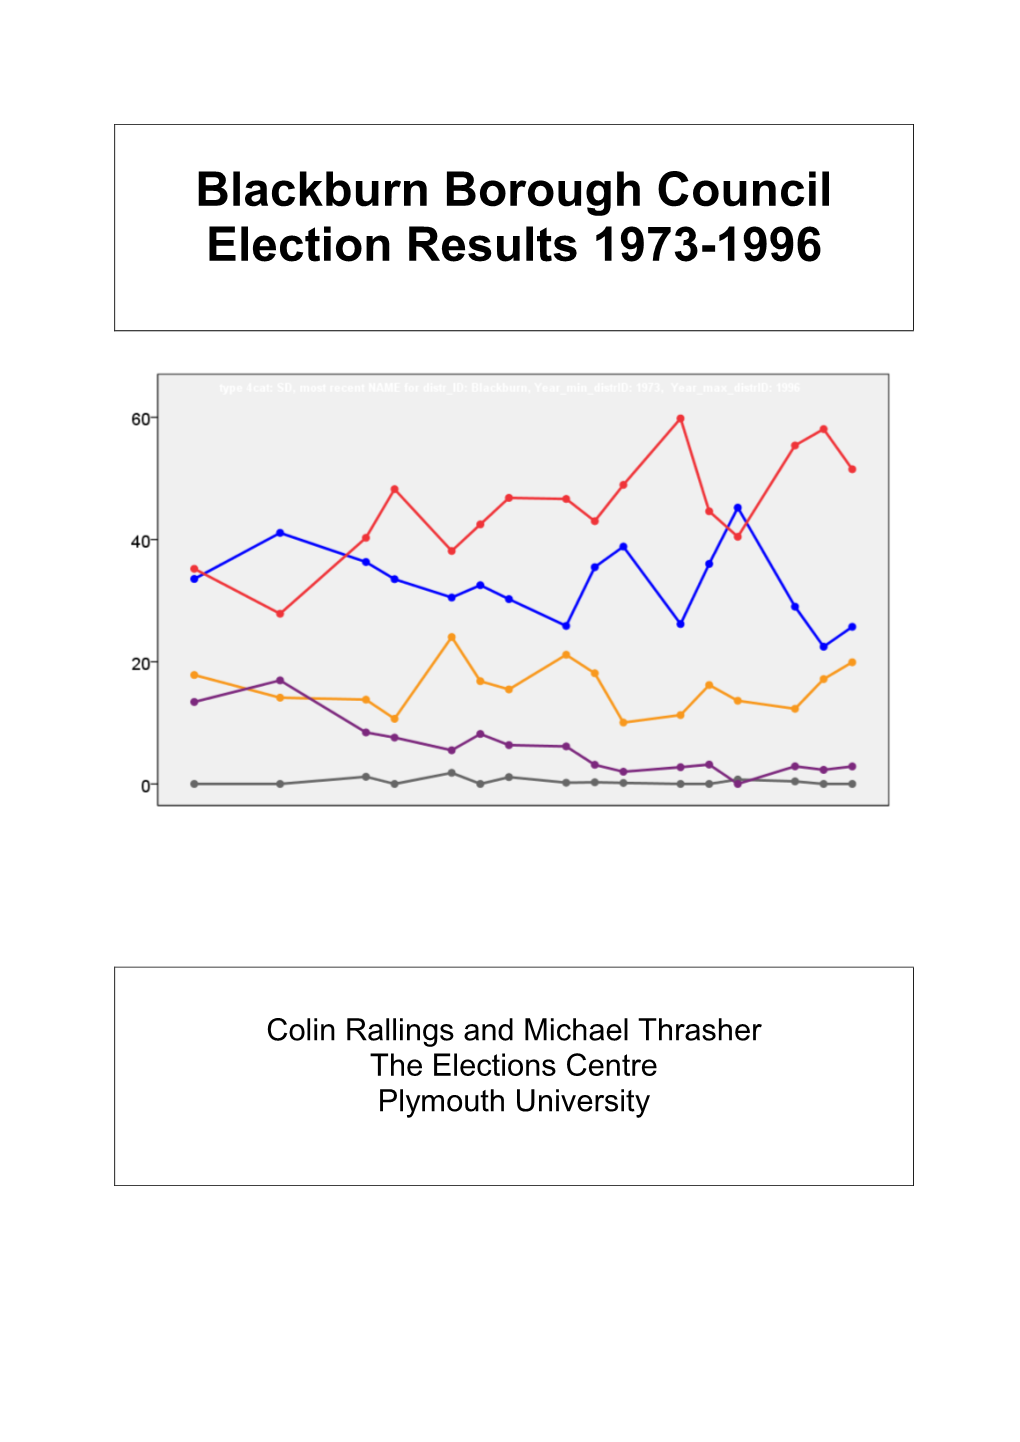 Blackburn Borough Council Election Results 1973-1996